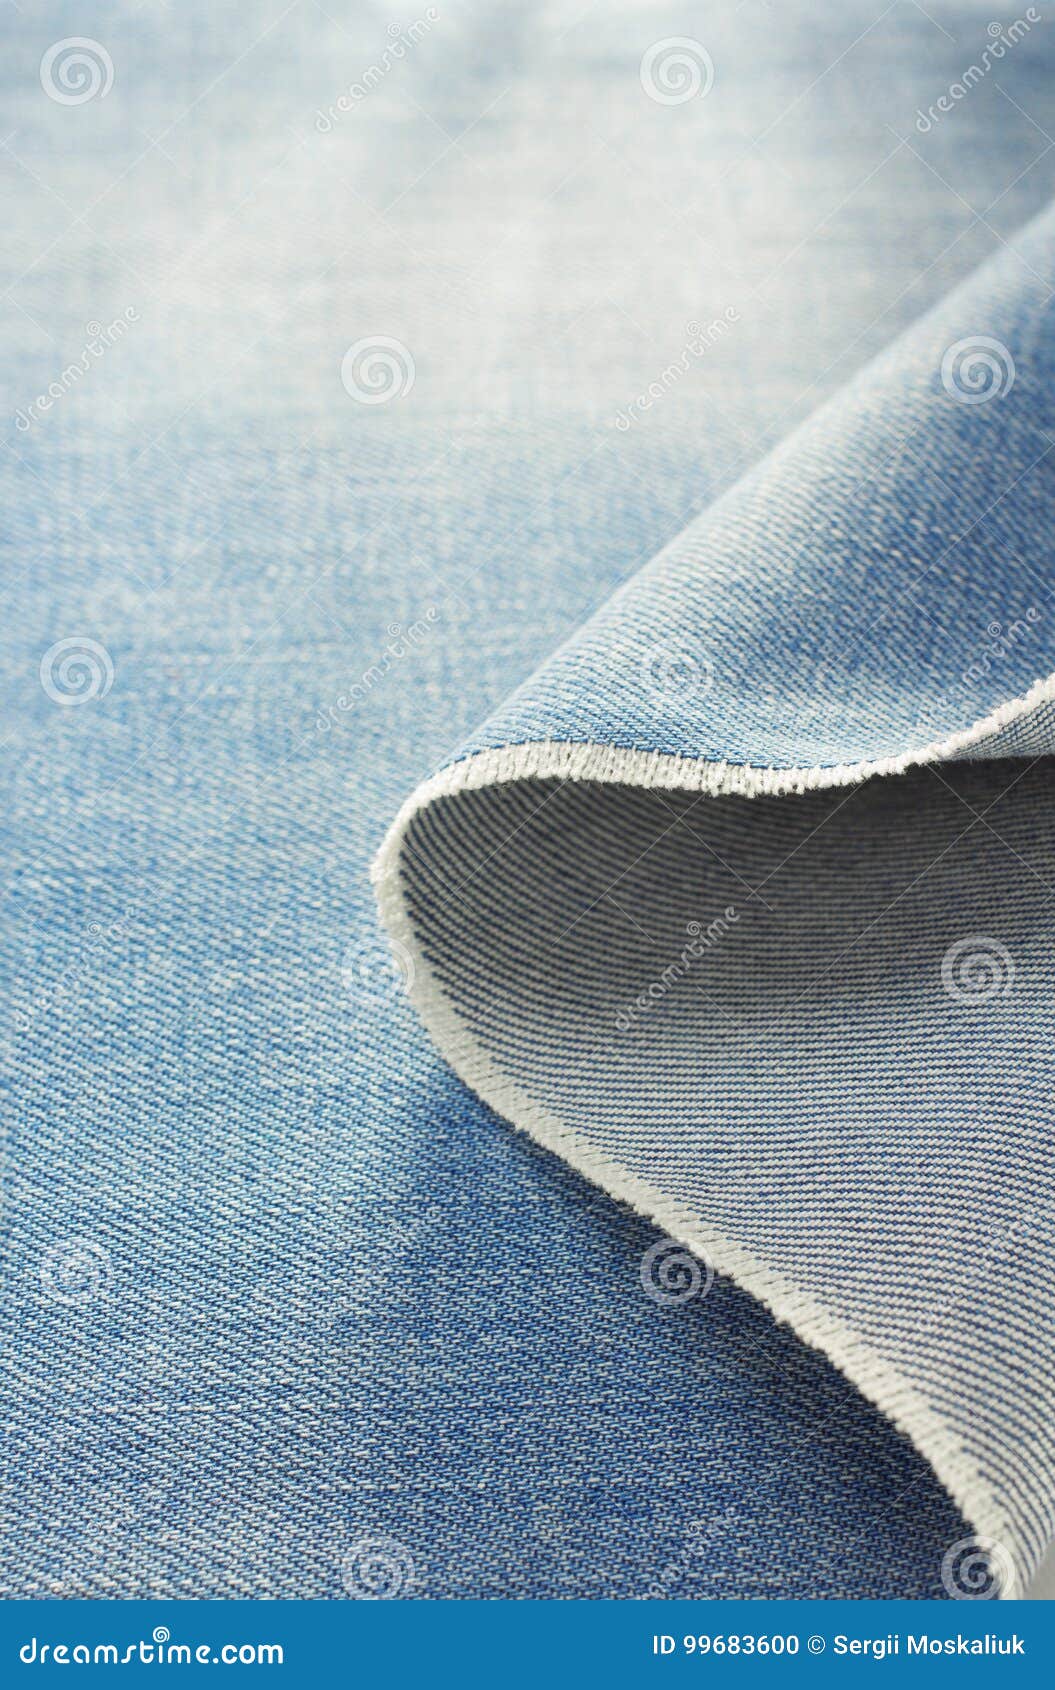 Blue jeans denim fabric stock photo. Image of folded - 99683600